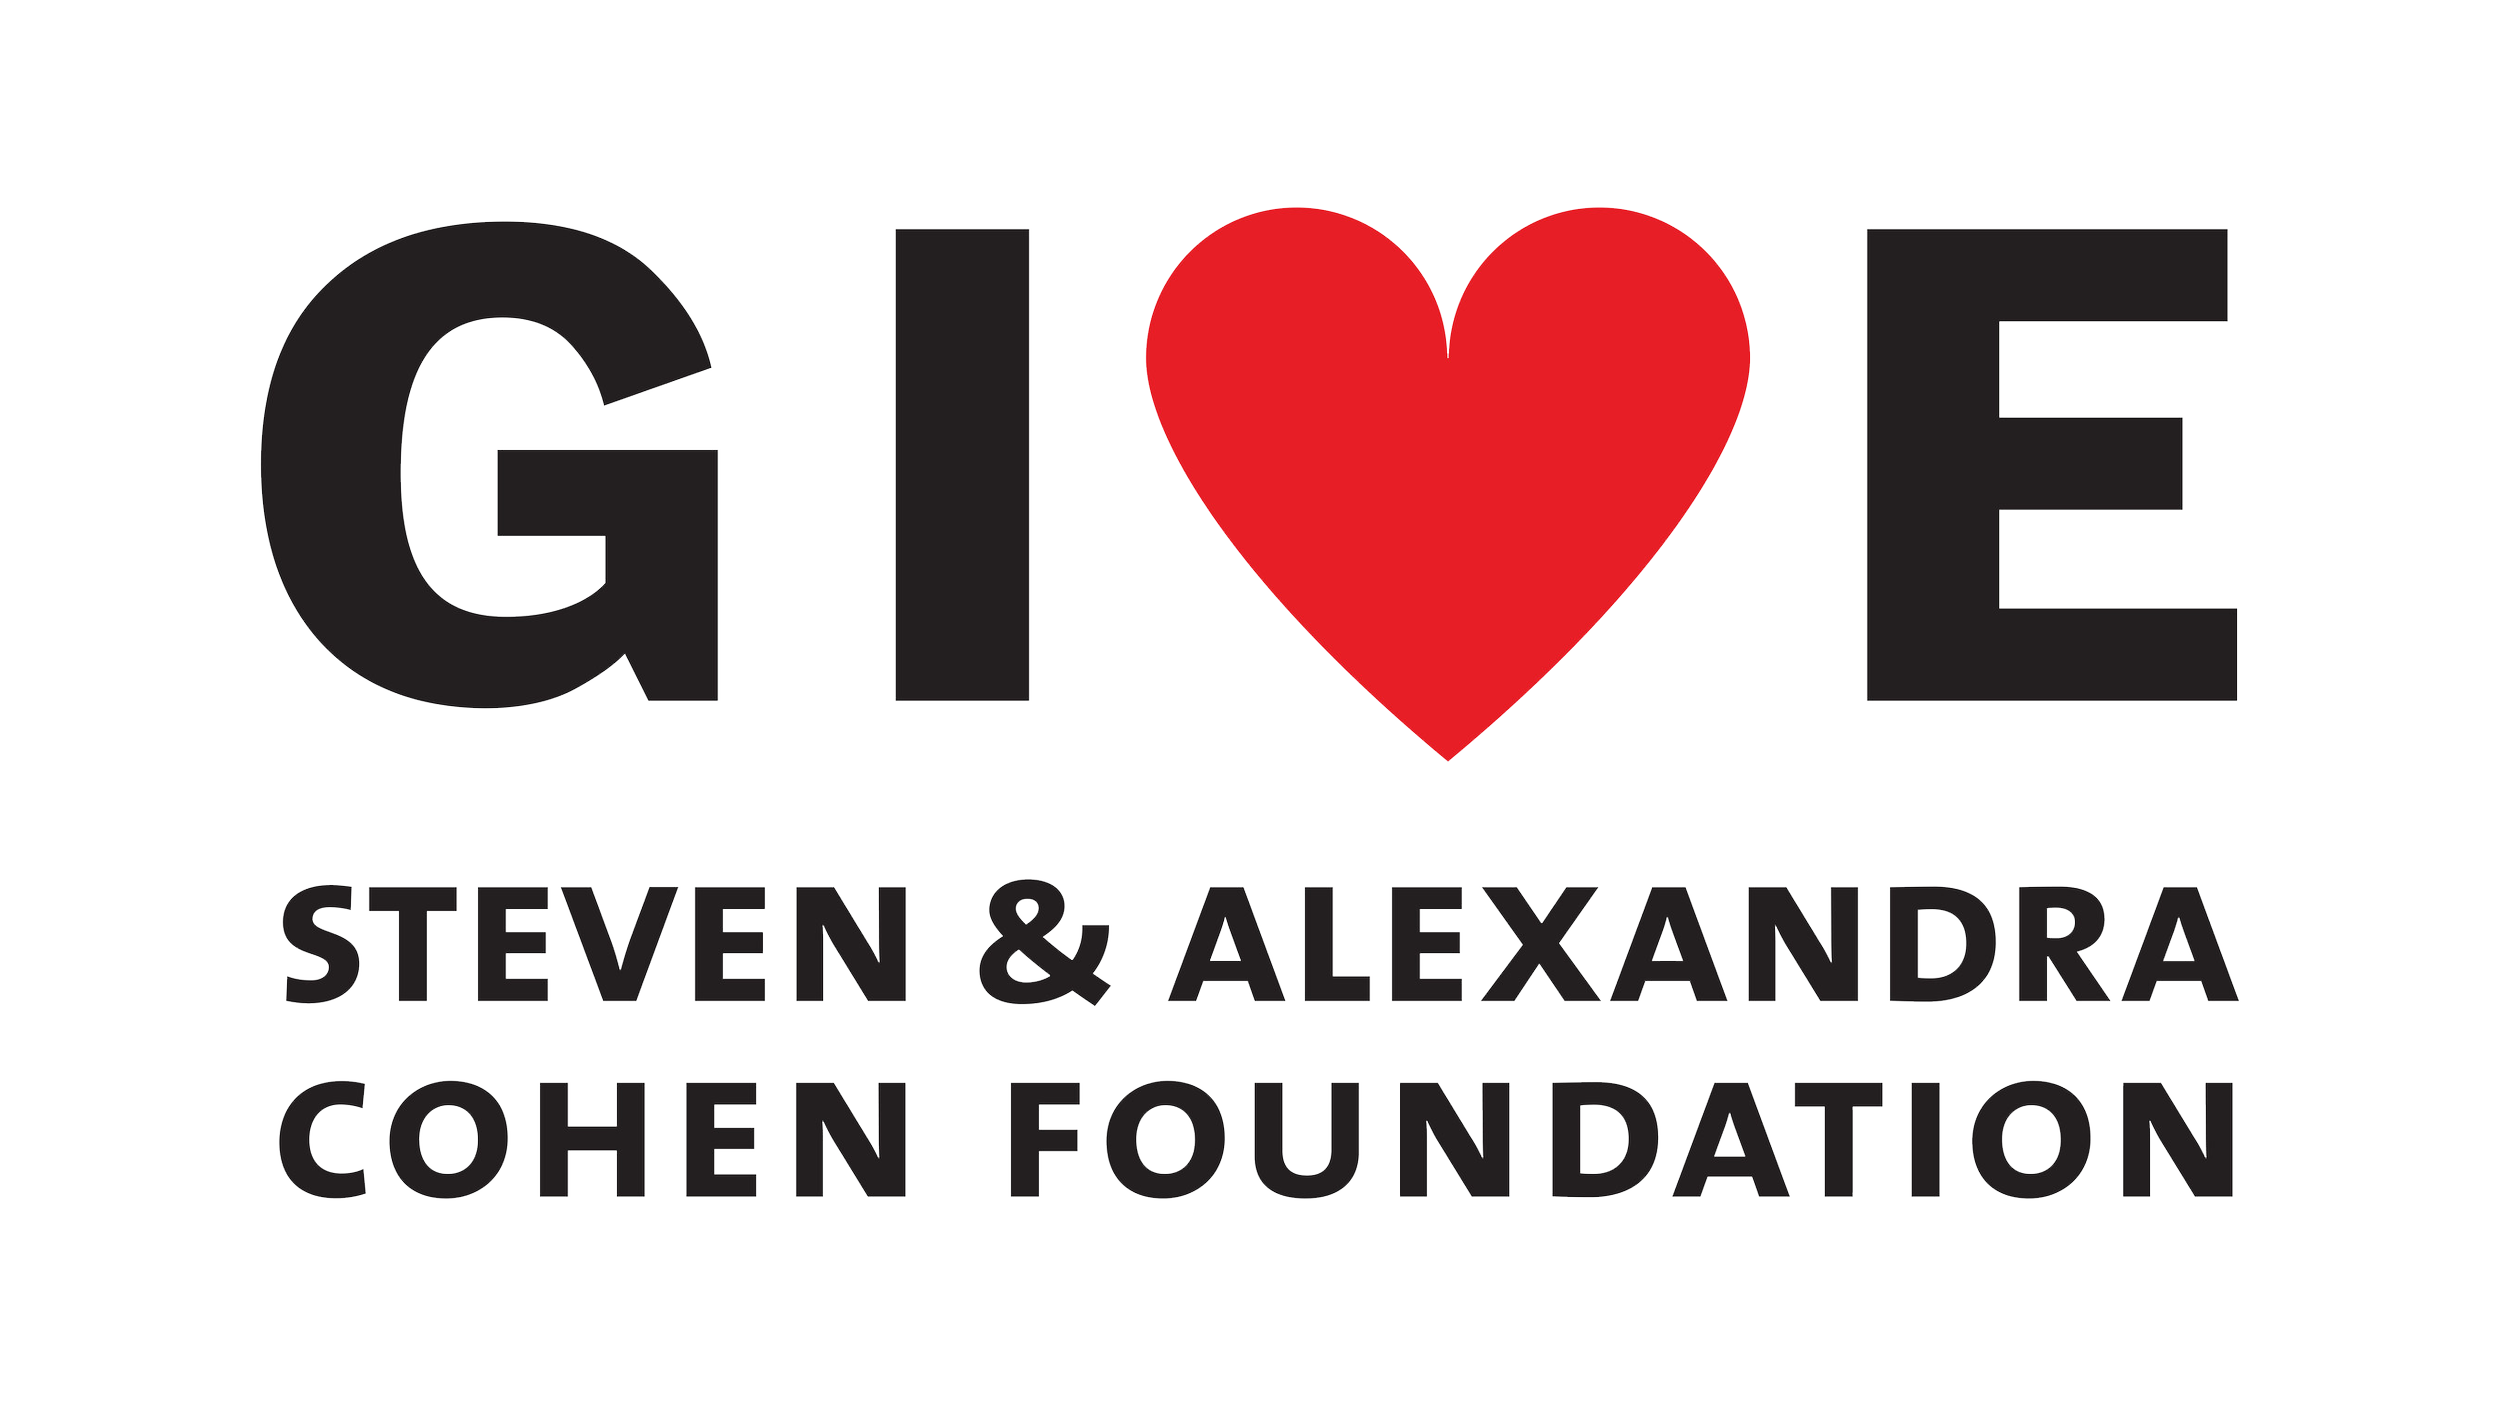 Steven and Alexandra Cohen Foundation Transparent BG Logo.png